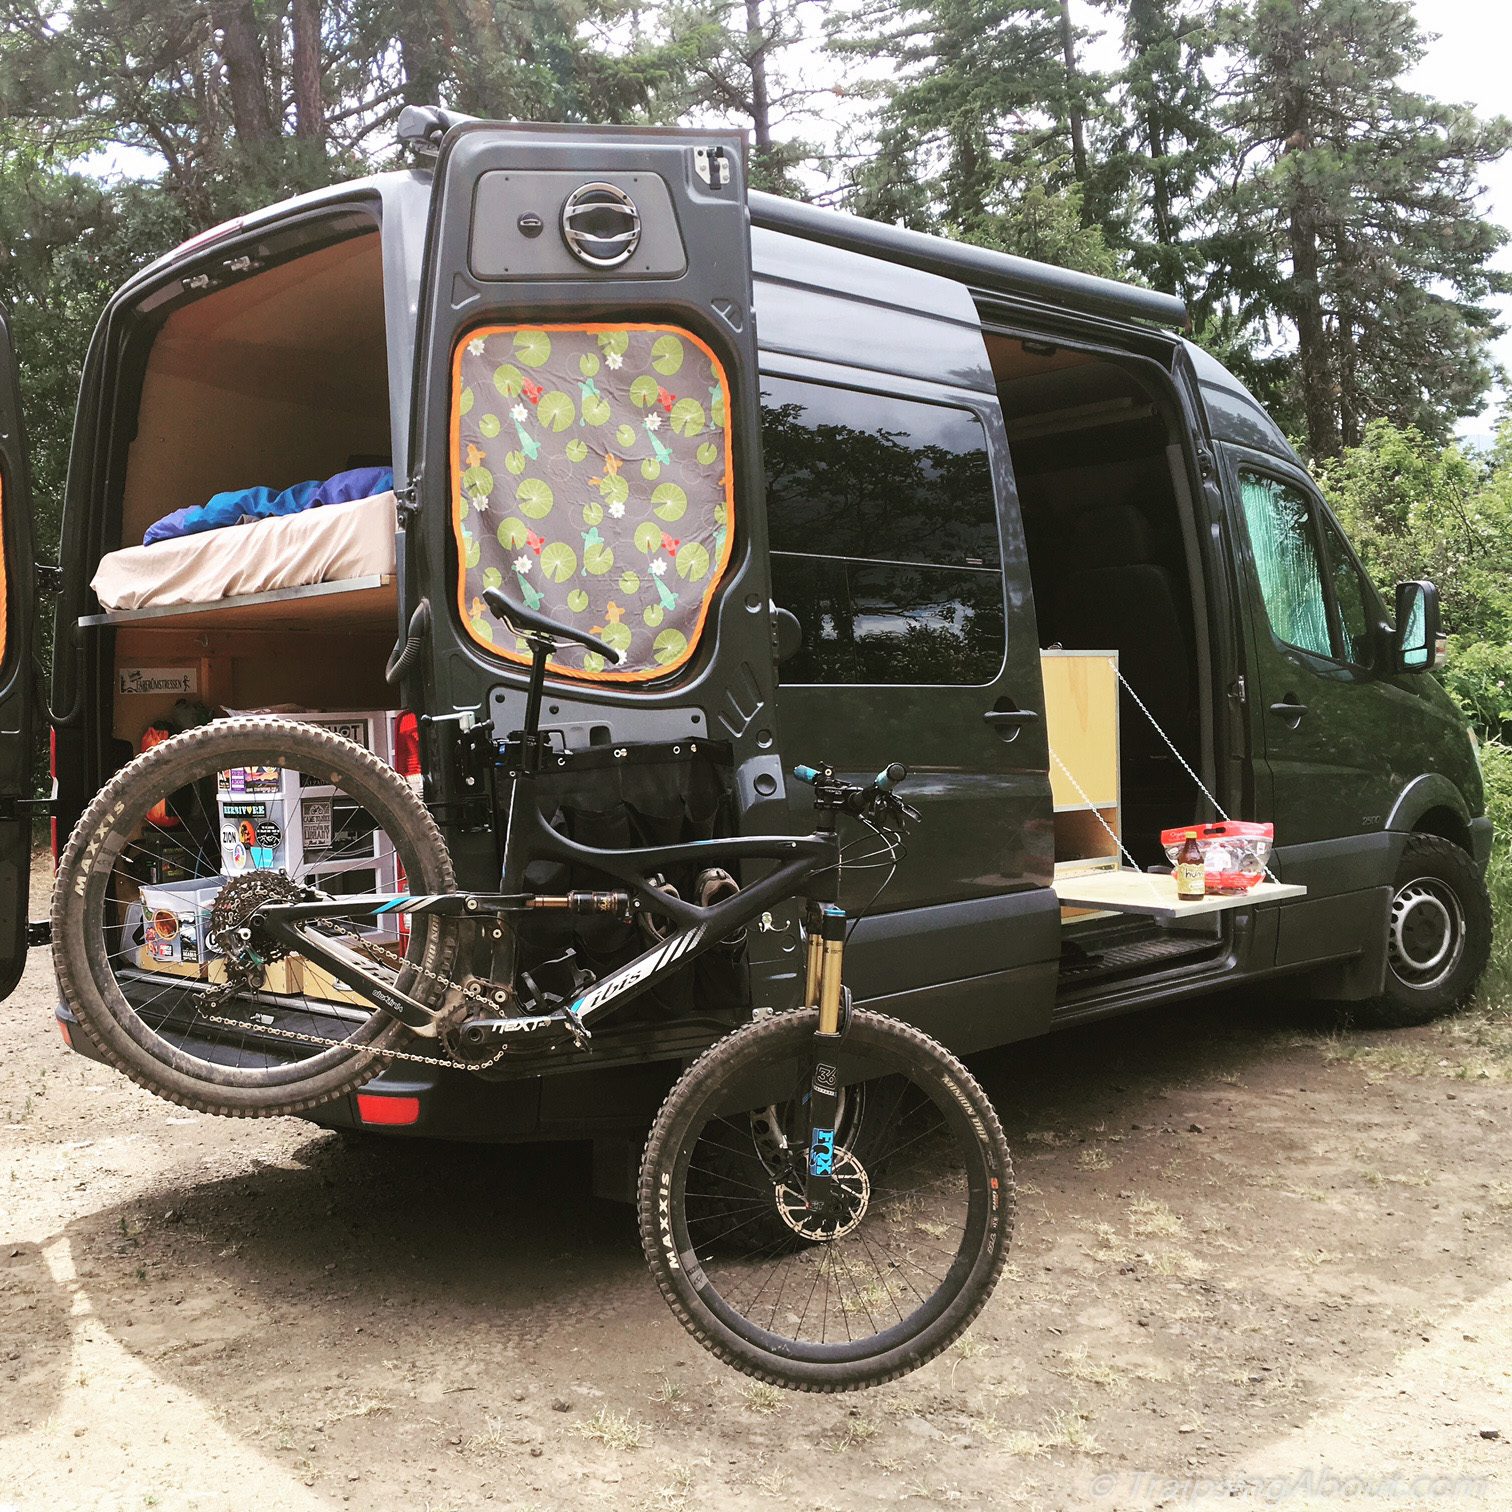 The Adventure Mobile Our DIY Sprinter Camper Van Bicycle Hauler